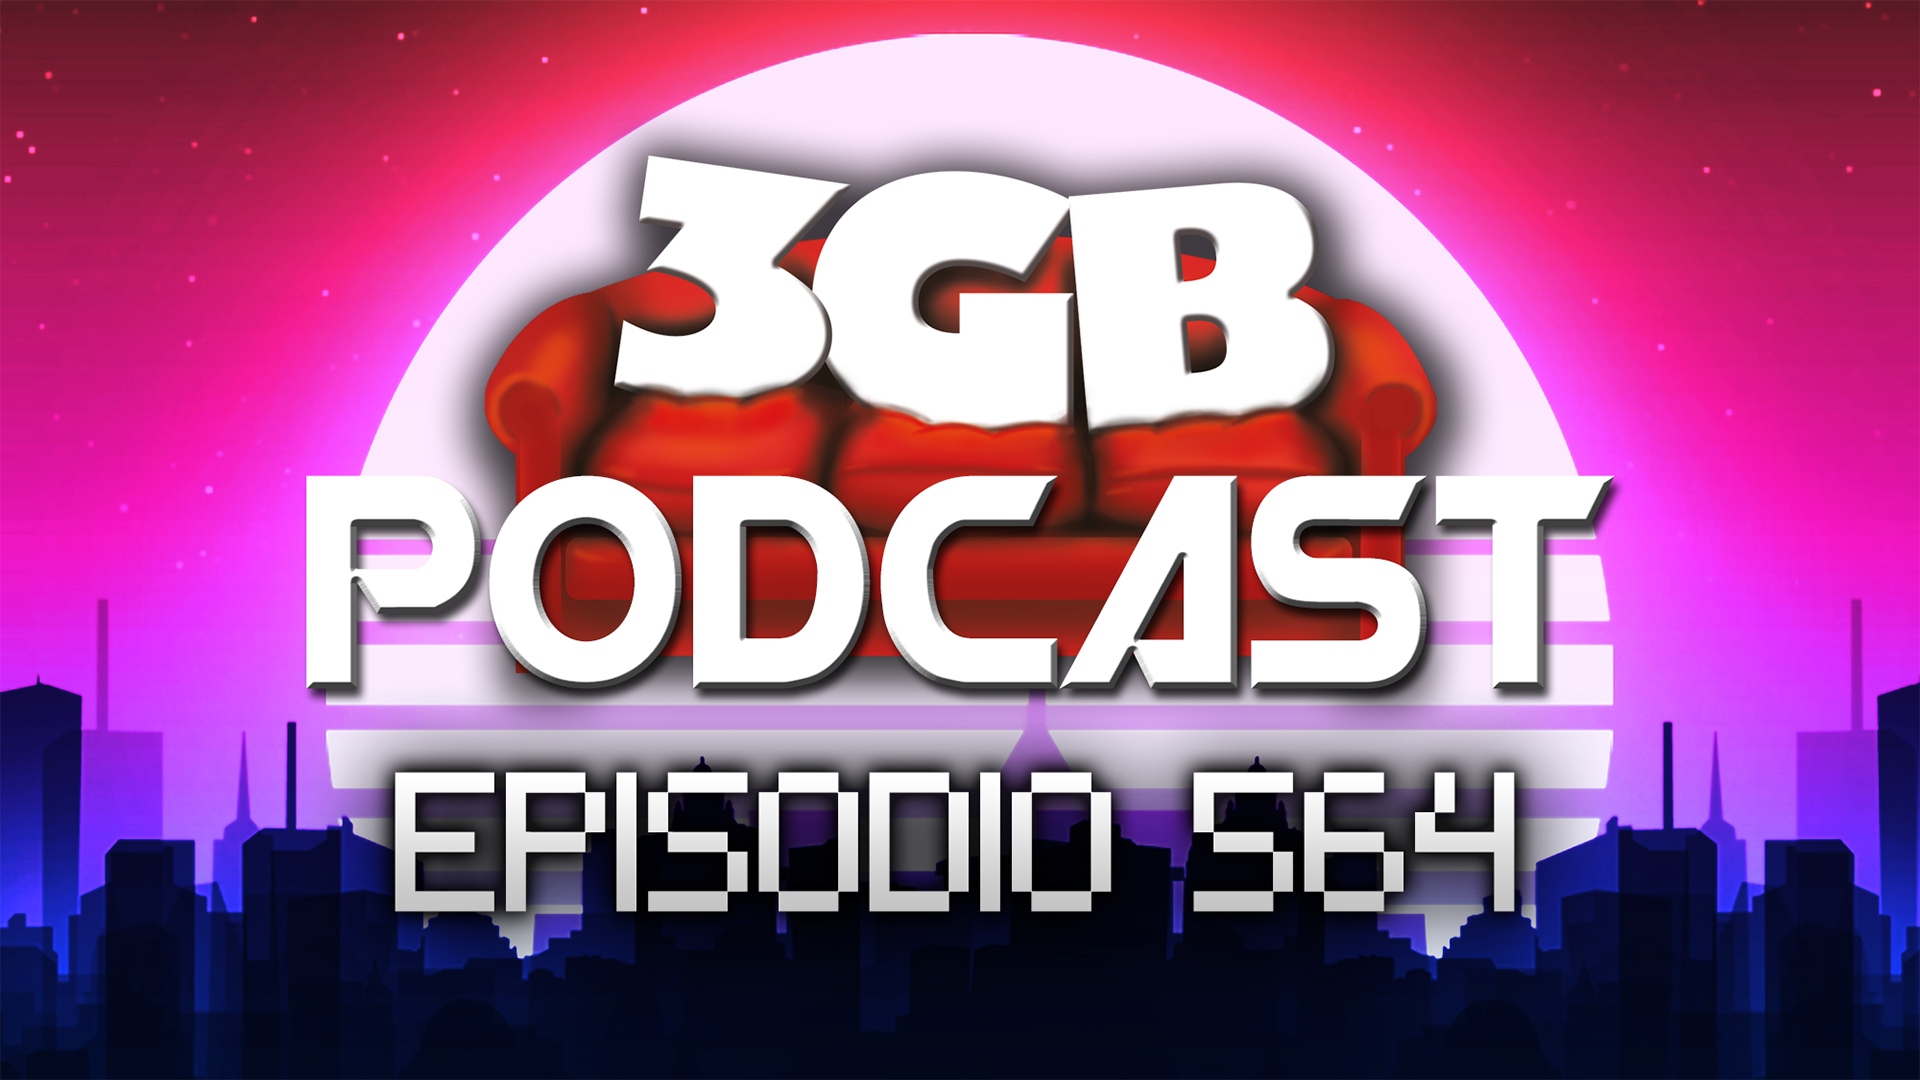 Podcast: Episodio 564, Conocimiento Técnico